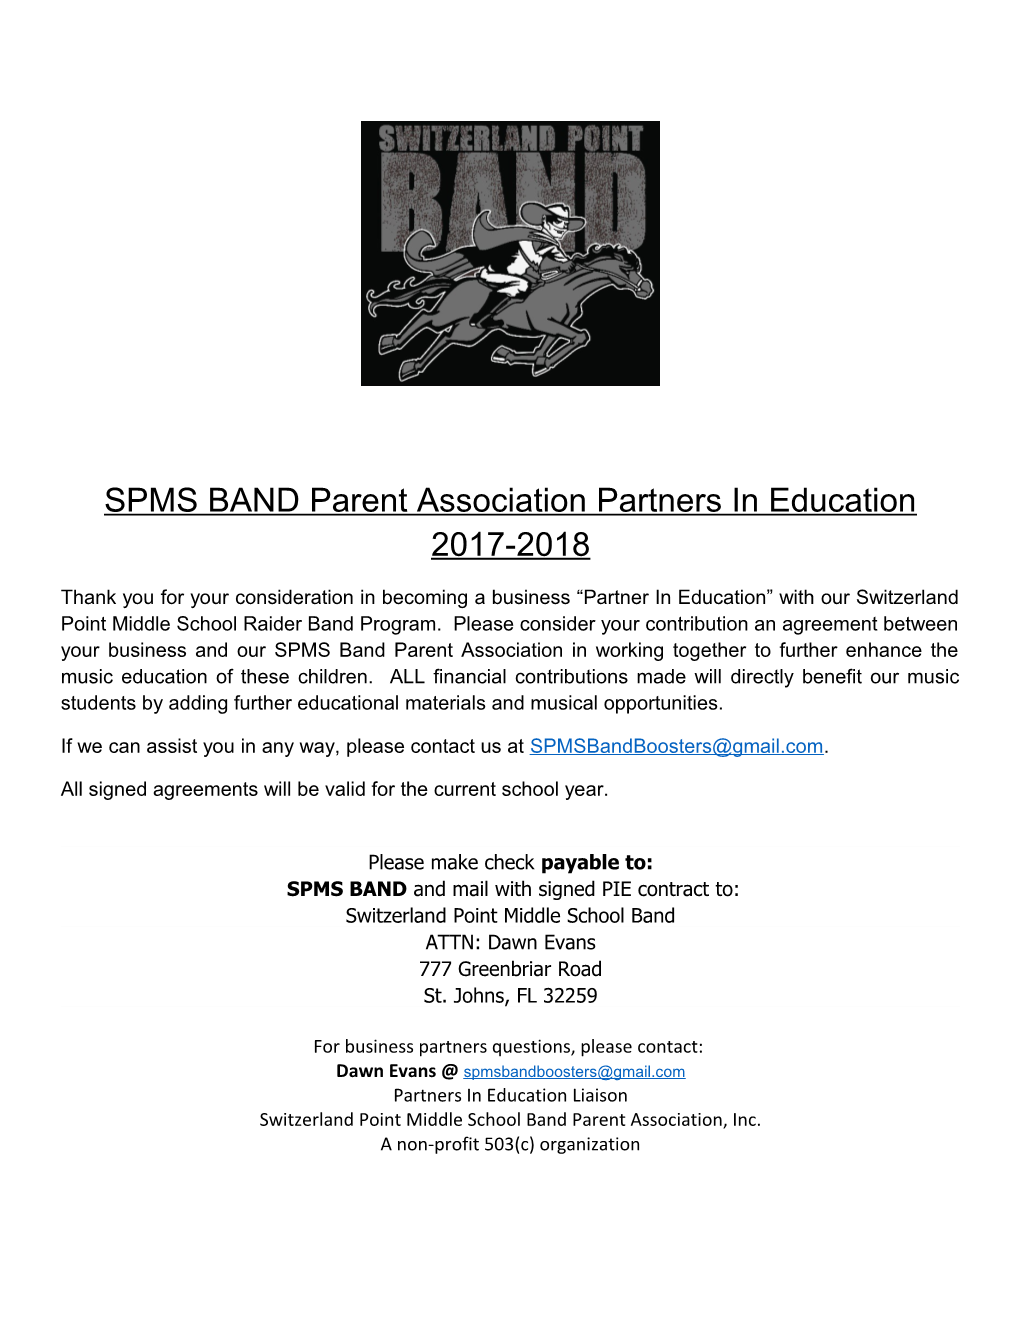 SPMS Bandparent Association Partners in Education2017-2018